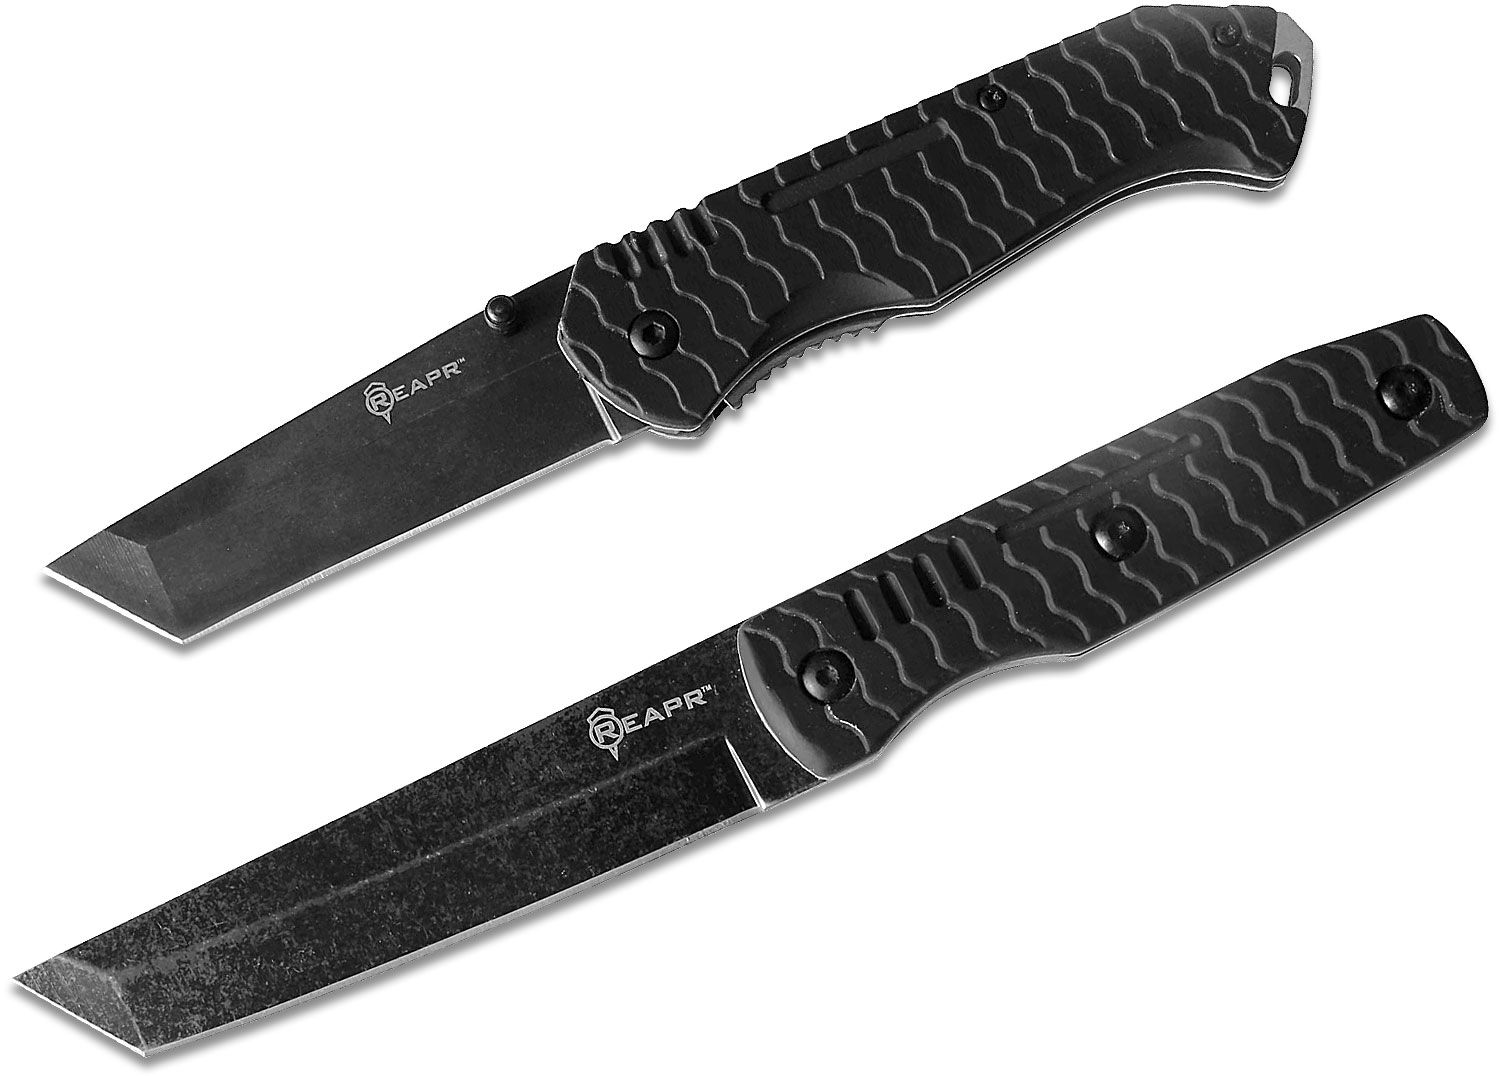 Reapr 11008 2-Piece Knife Combo Set, Black Tanto Blades, Black ABS 